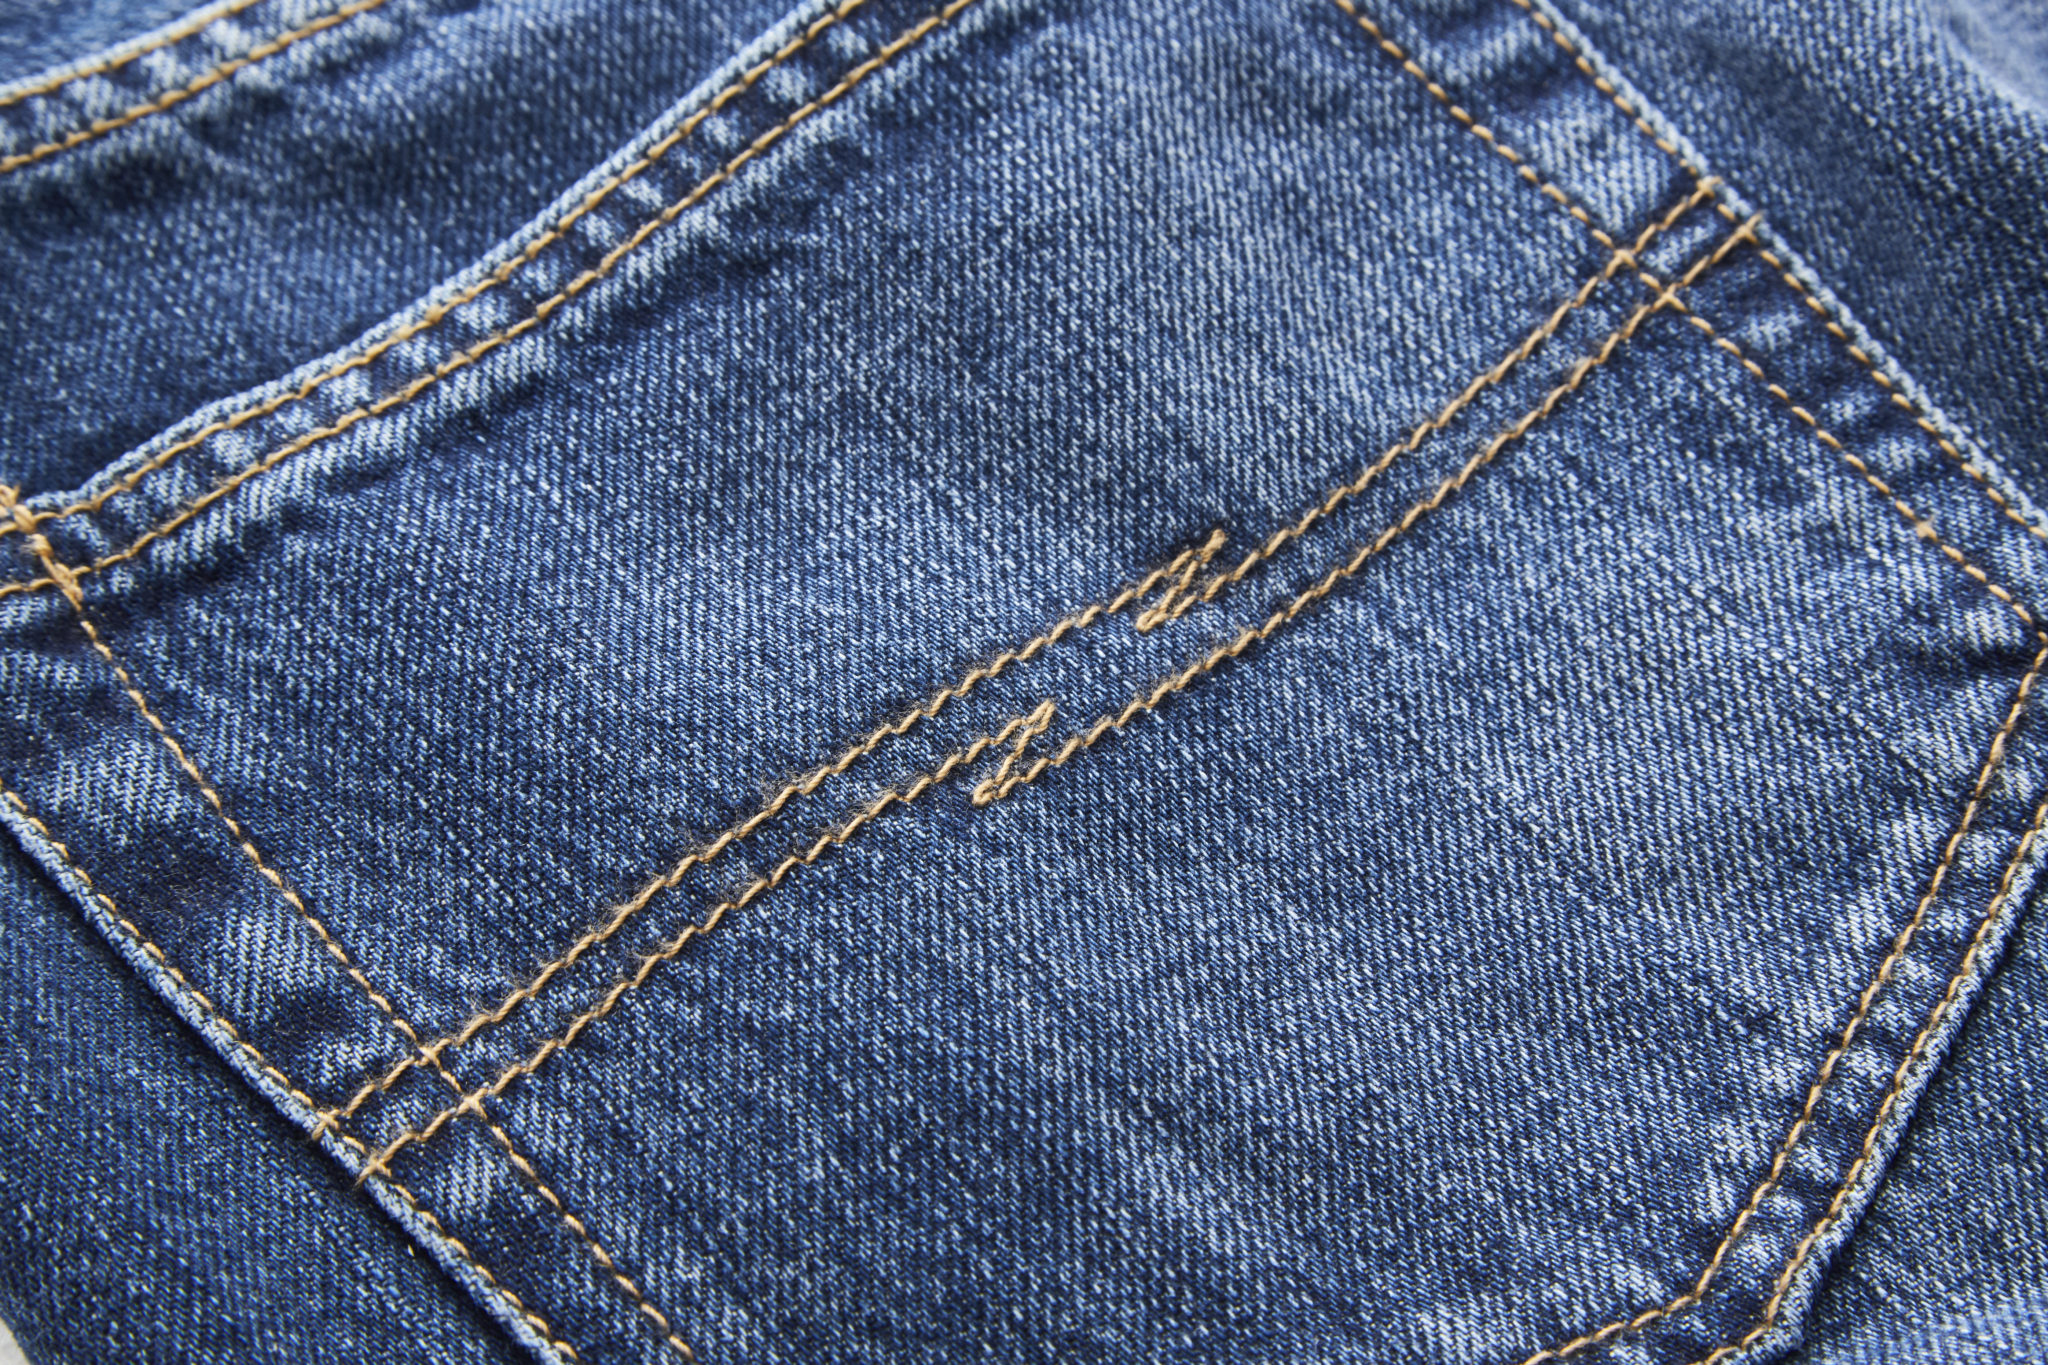 Bandito Blue Medium Wash Slim Fit Selvedge Jeans - Barbanera